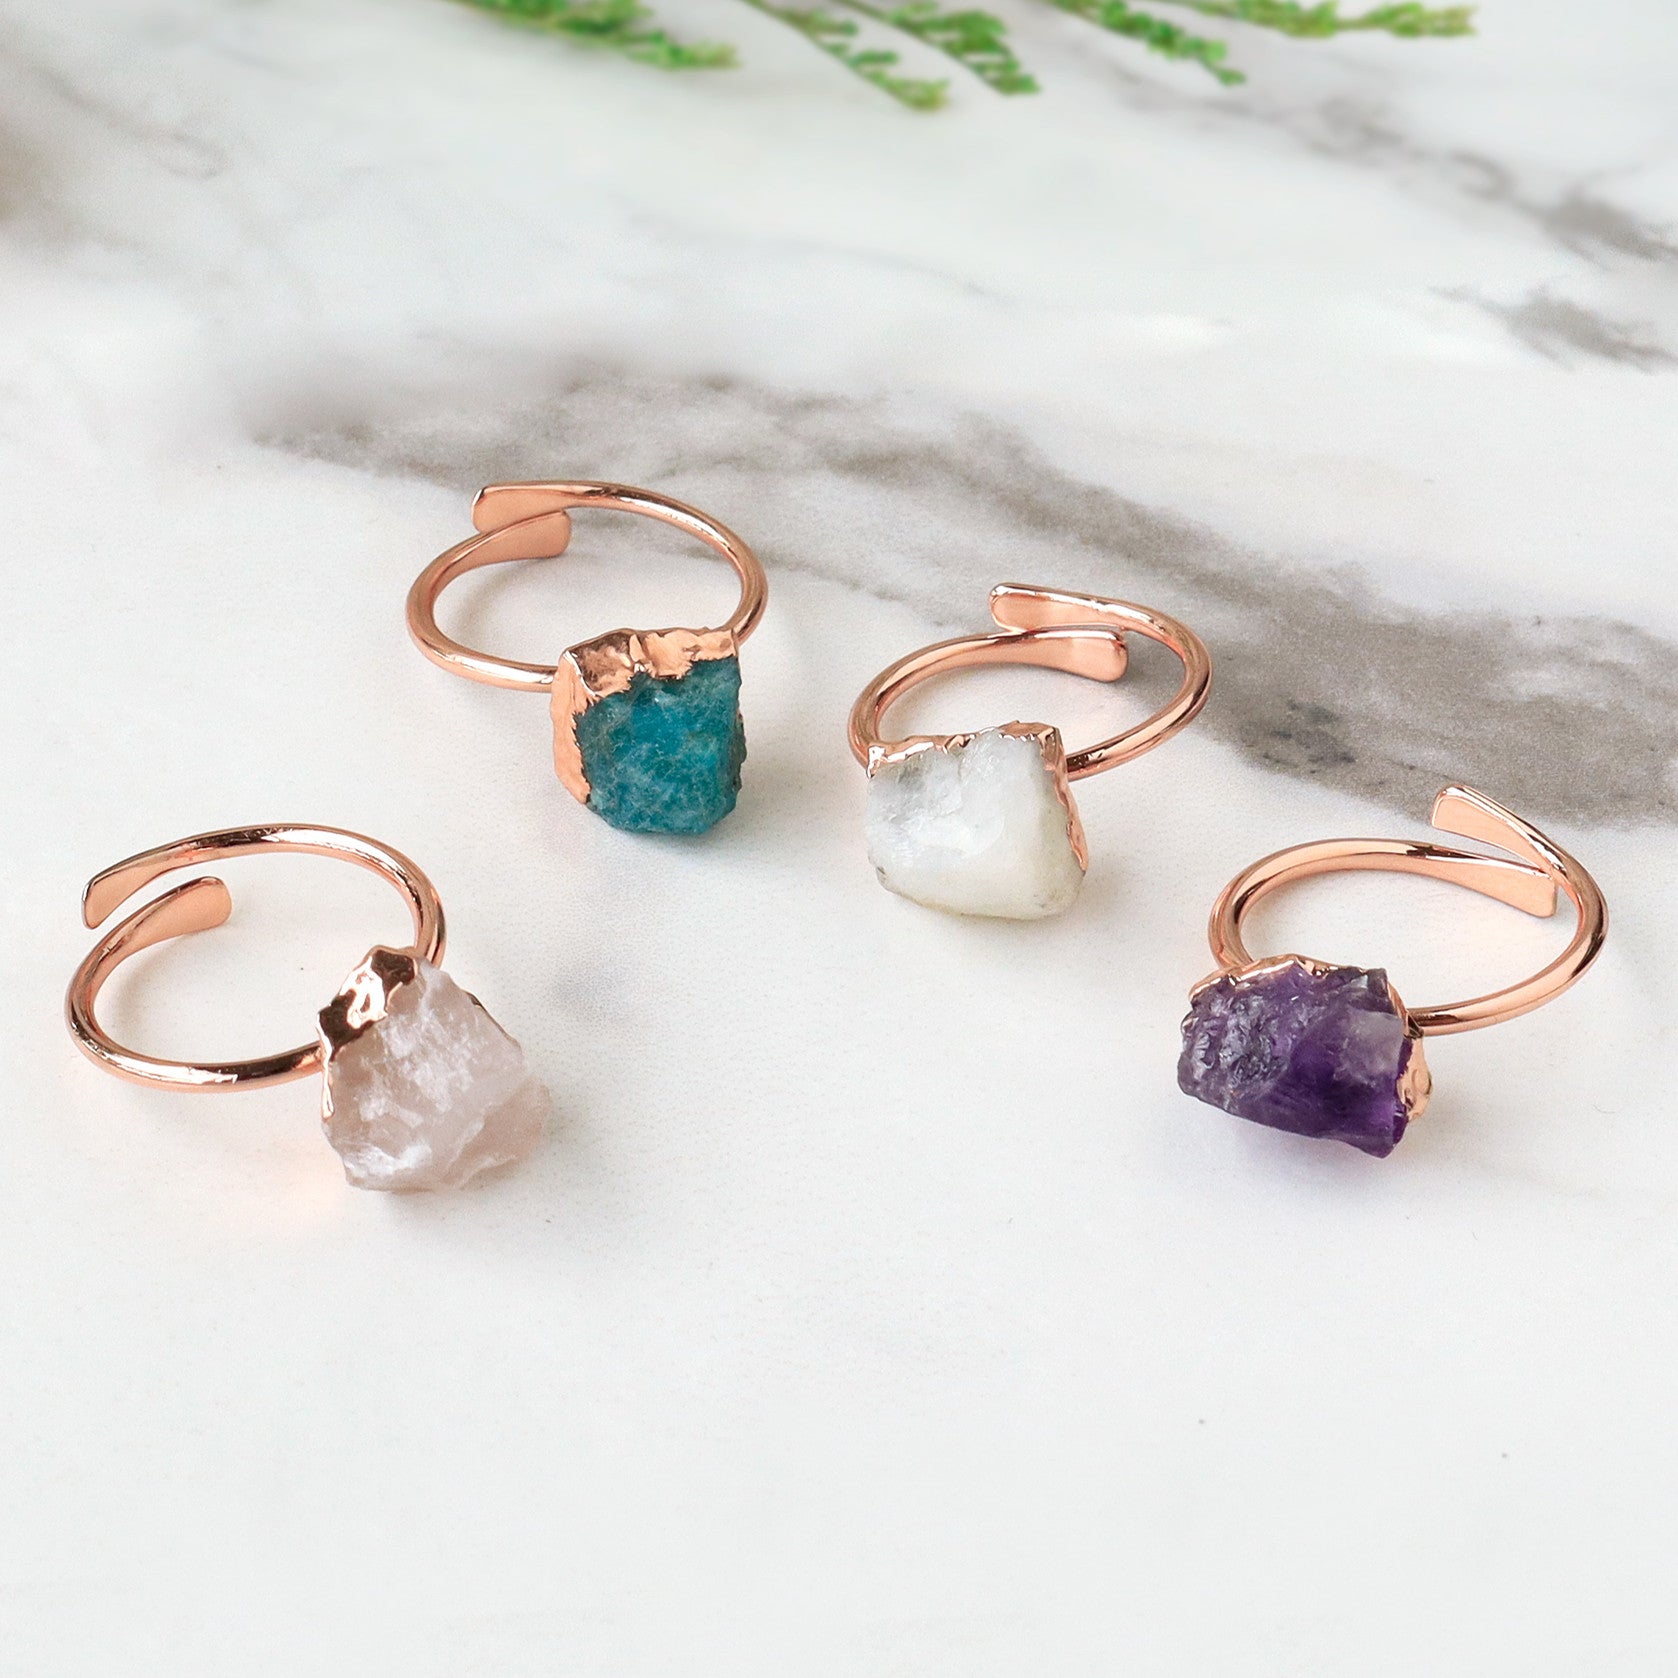 Rose Gold Plated Rainbow Gemstone Ring, Adjustable, Raw Healing Crystal Stone Ring, Birthstone Jewelry Ring BT013